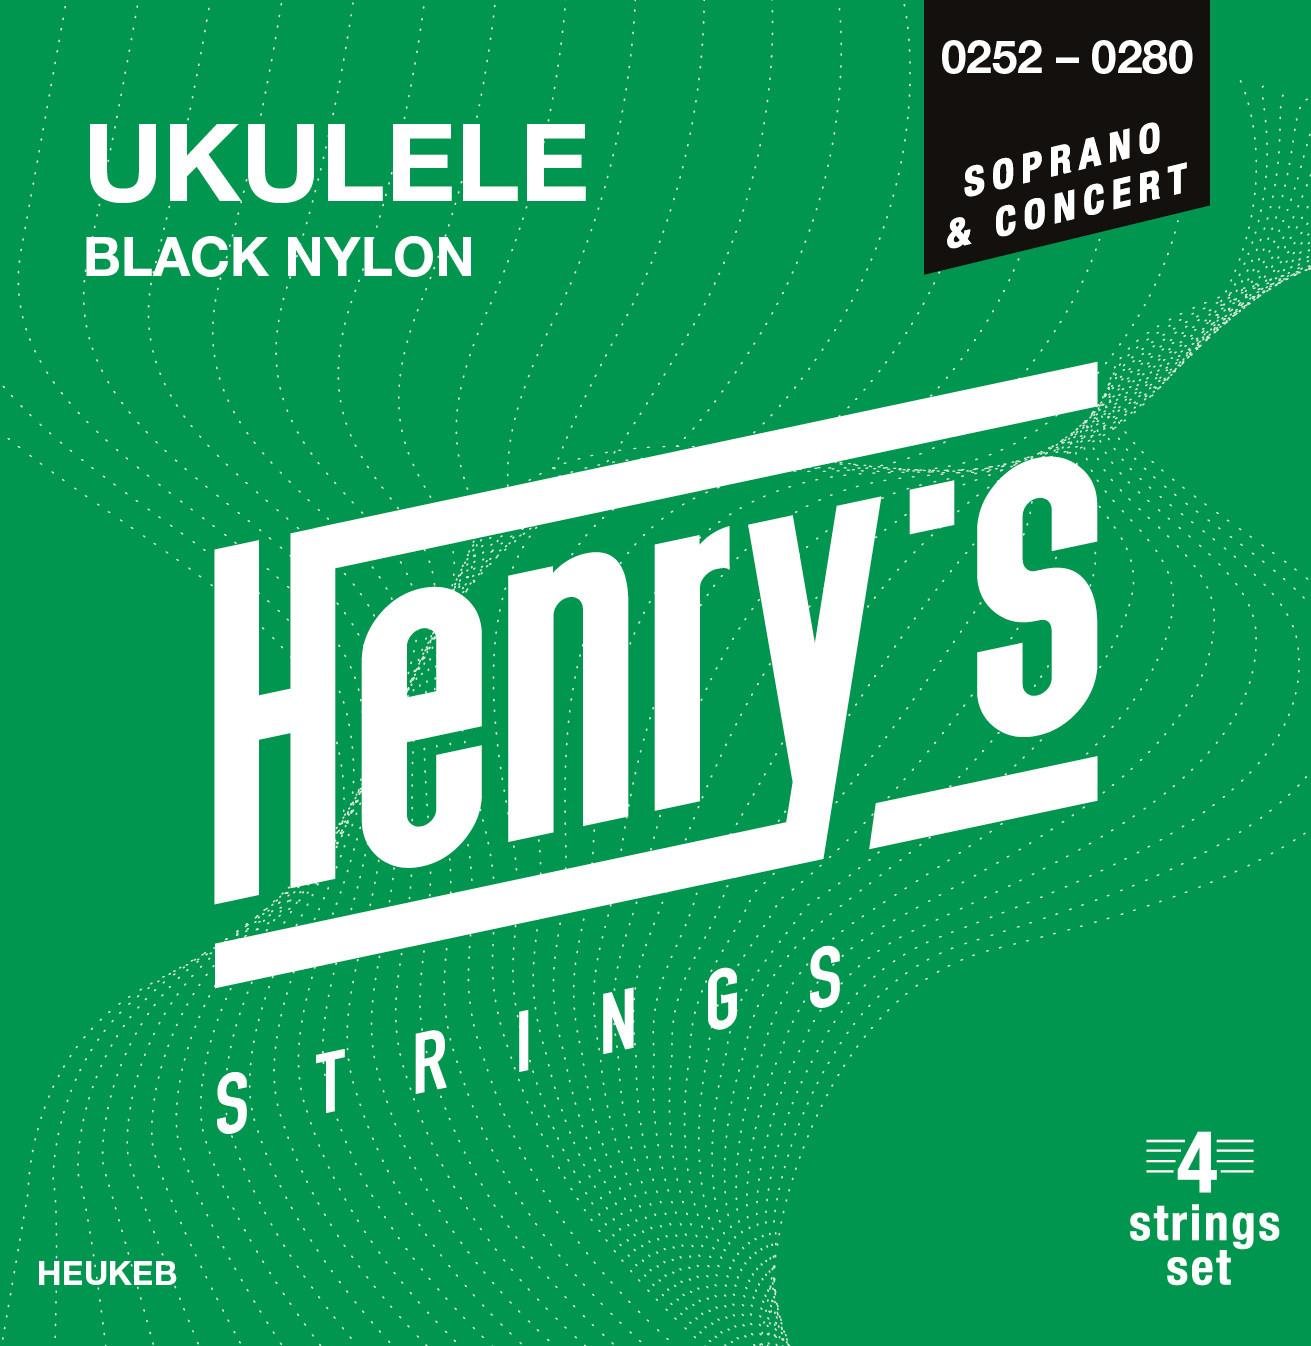 Húr Henry's Strings Black Nylon